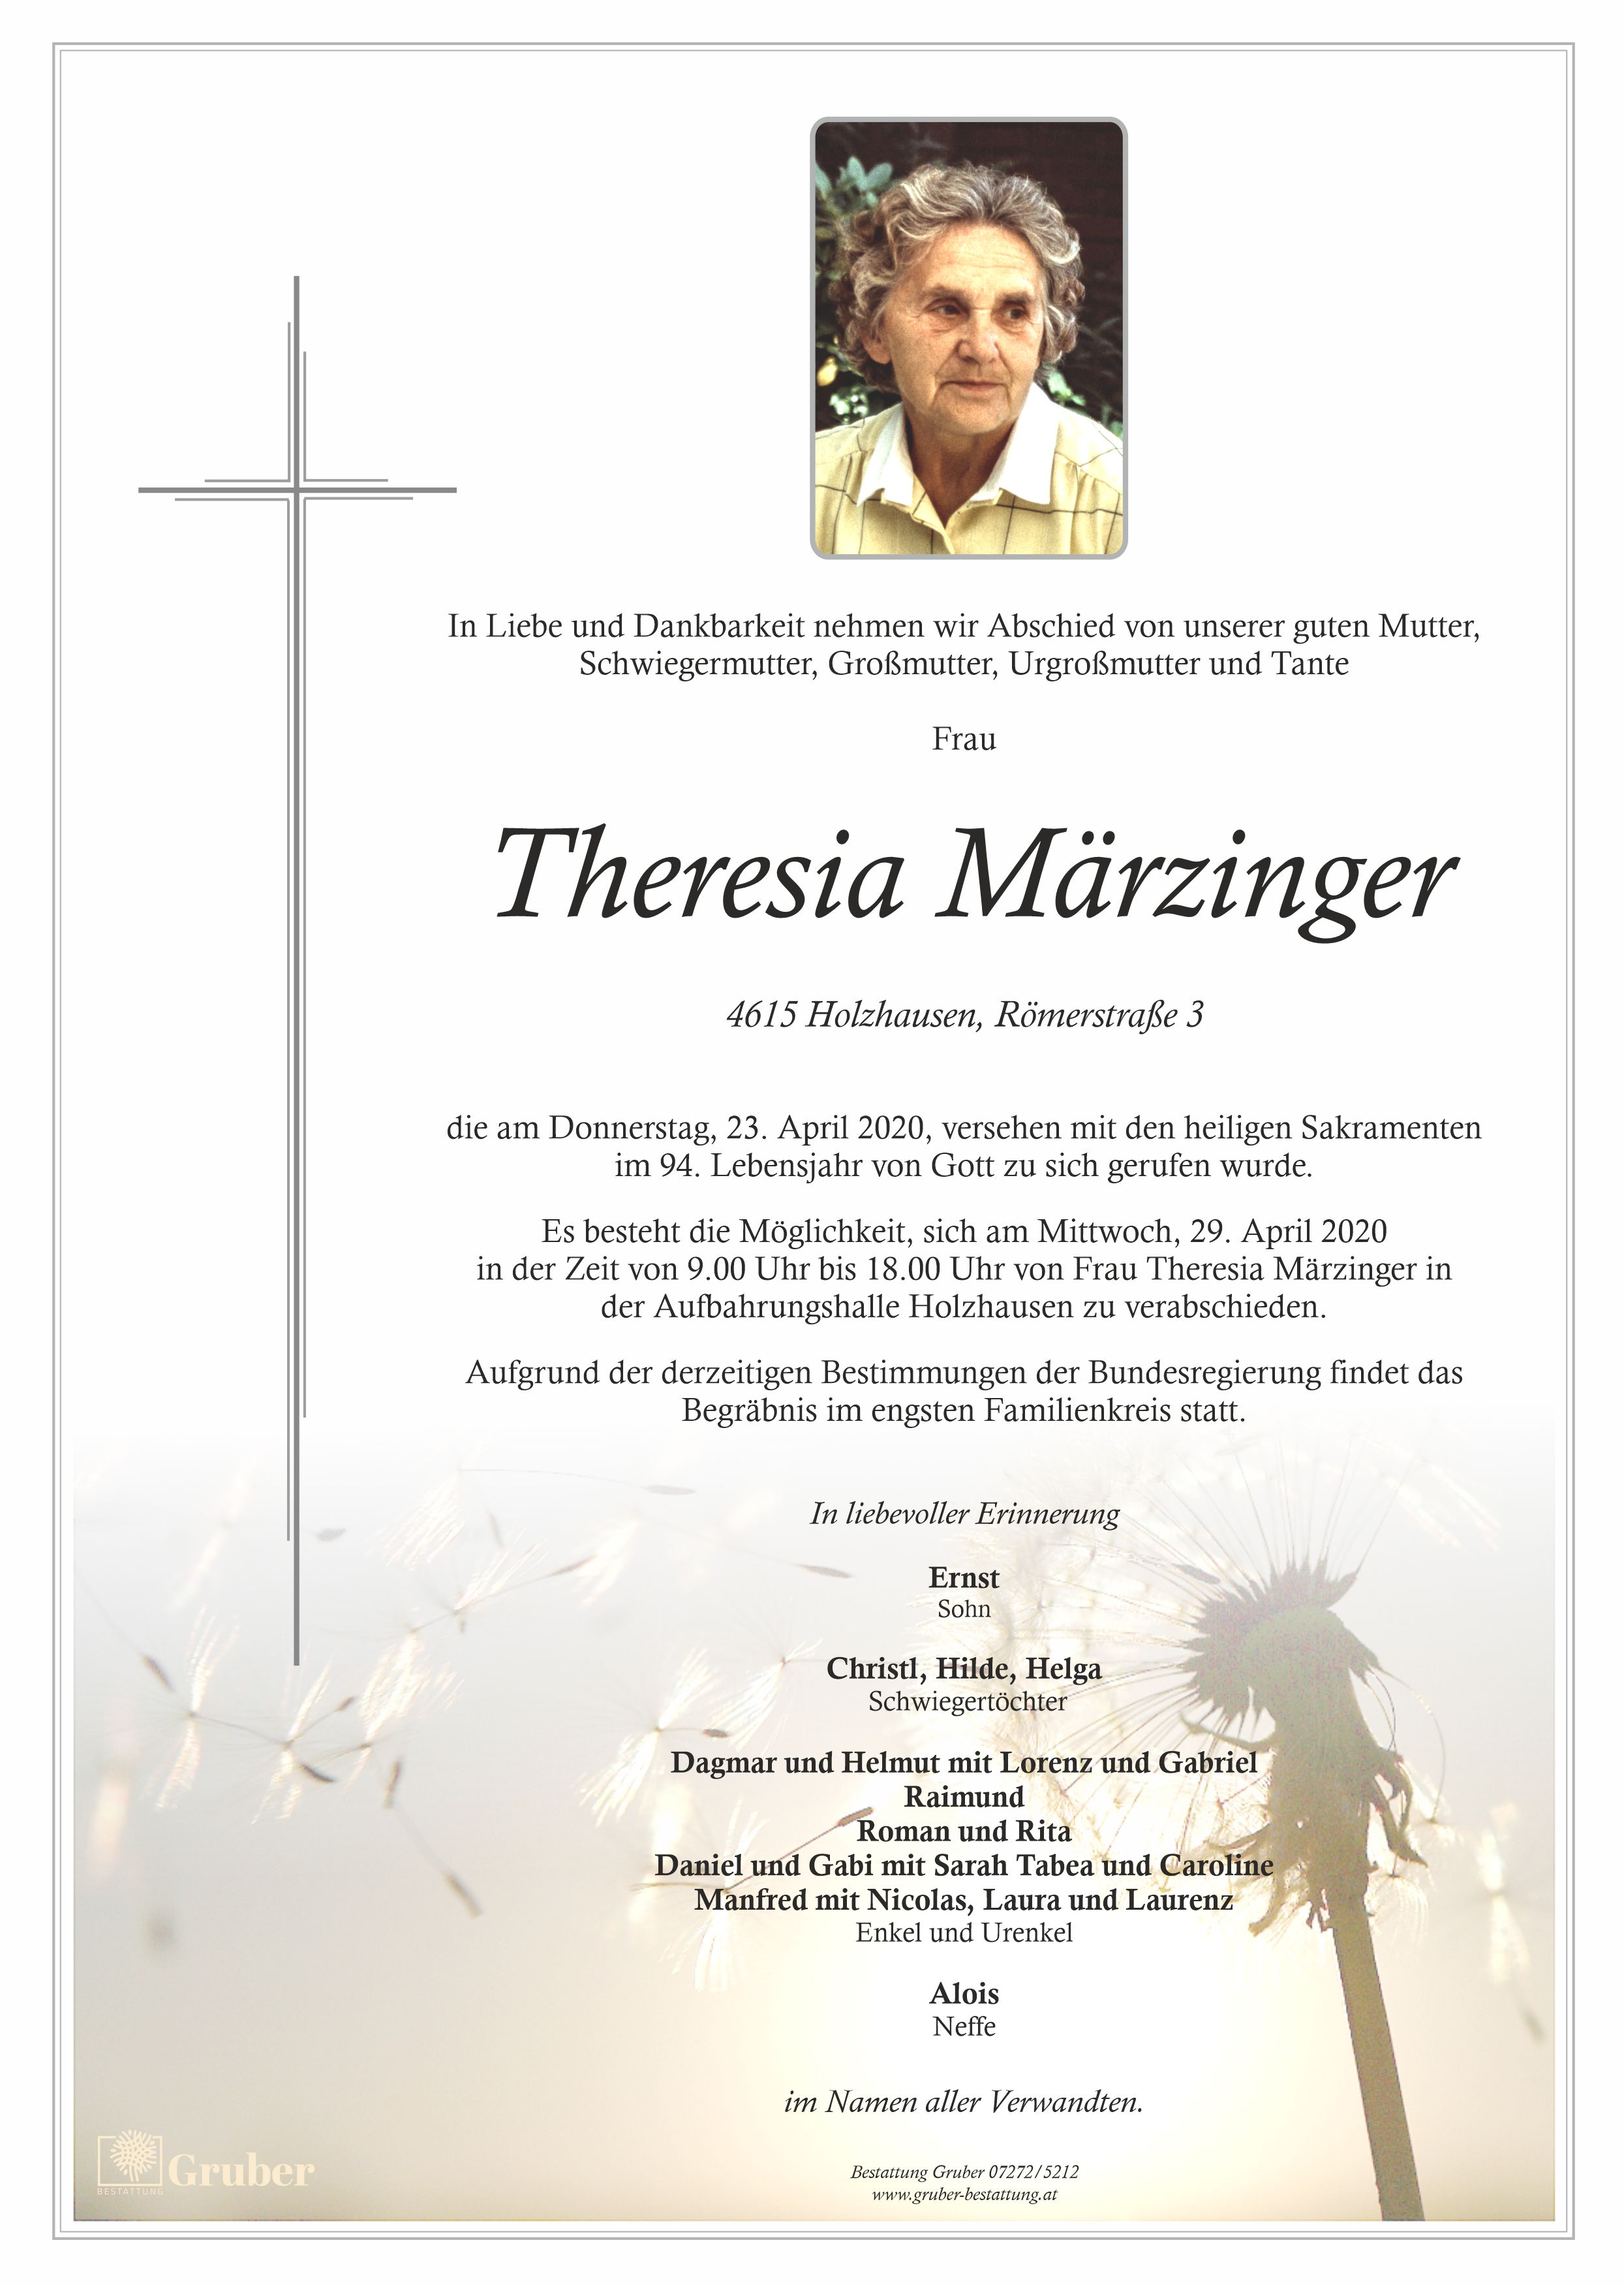 Theresia Märzinger (Holzhausen)